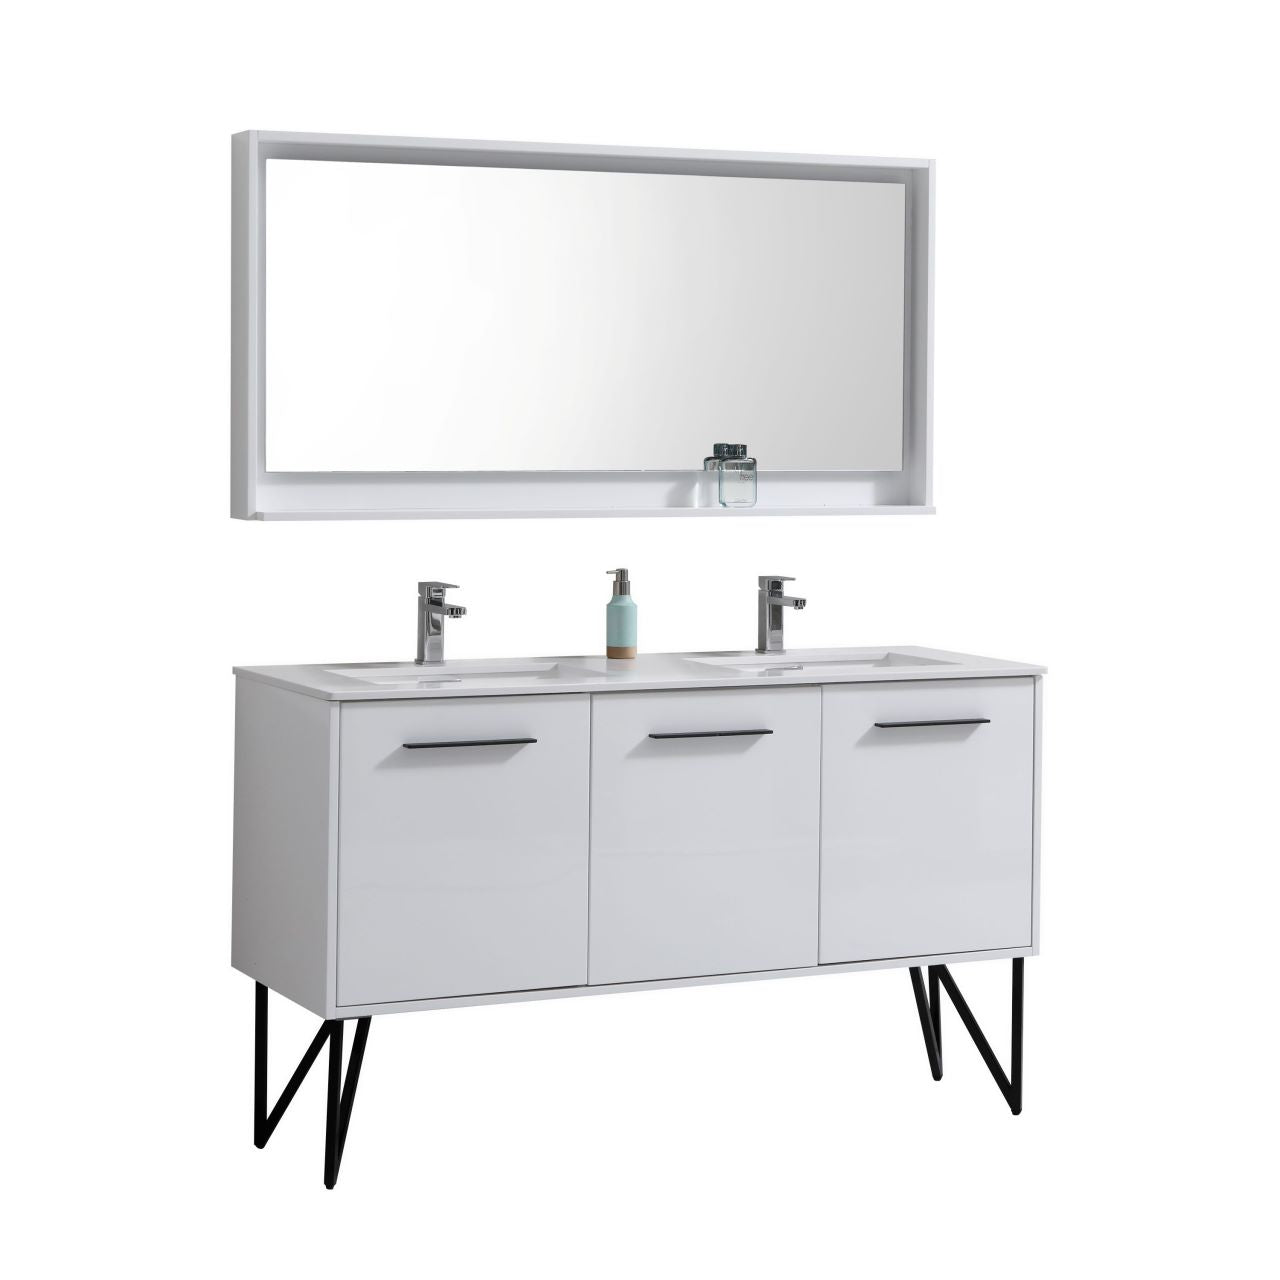 KUBEBATH Bosco KB60DGW 60" Single Bathroom Vanity in High Gloss White with Cream Quartz, Rectangle Sink, Angled View